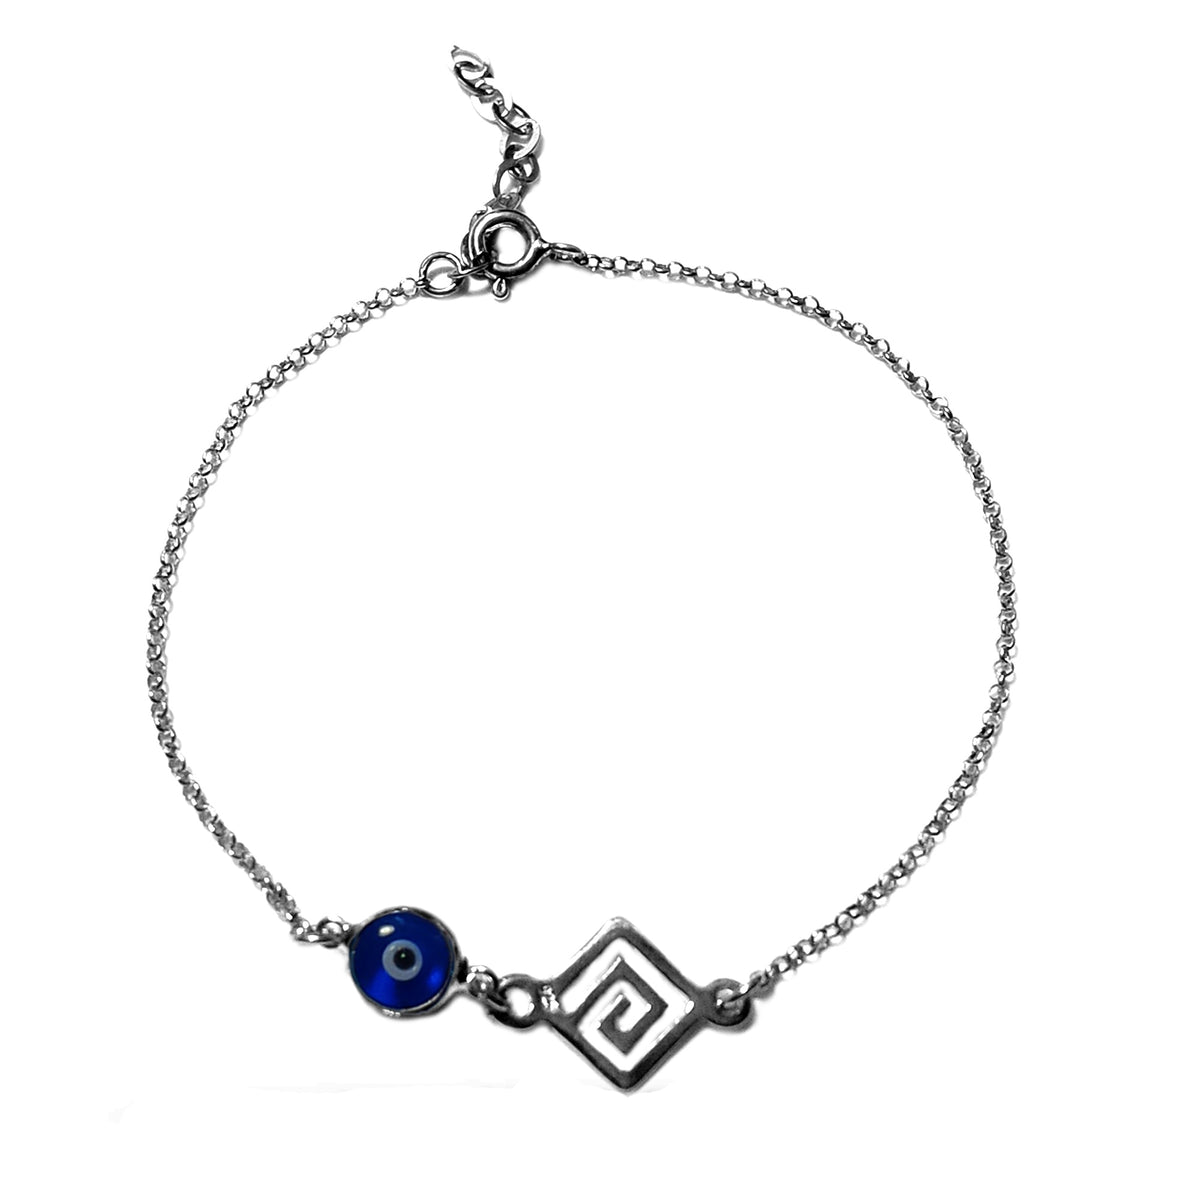 Greek Key Double Sided Evil Eye Adjustable Bracelet Sterling Silver, 7" to 8.5" fine designer jewelry for men and women